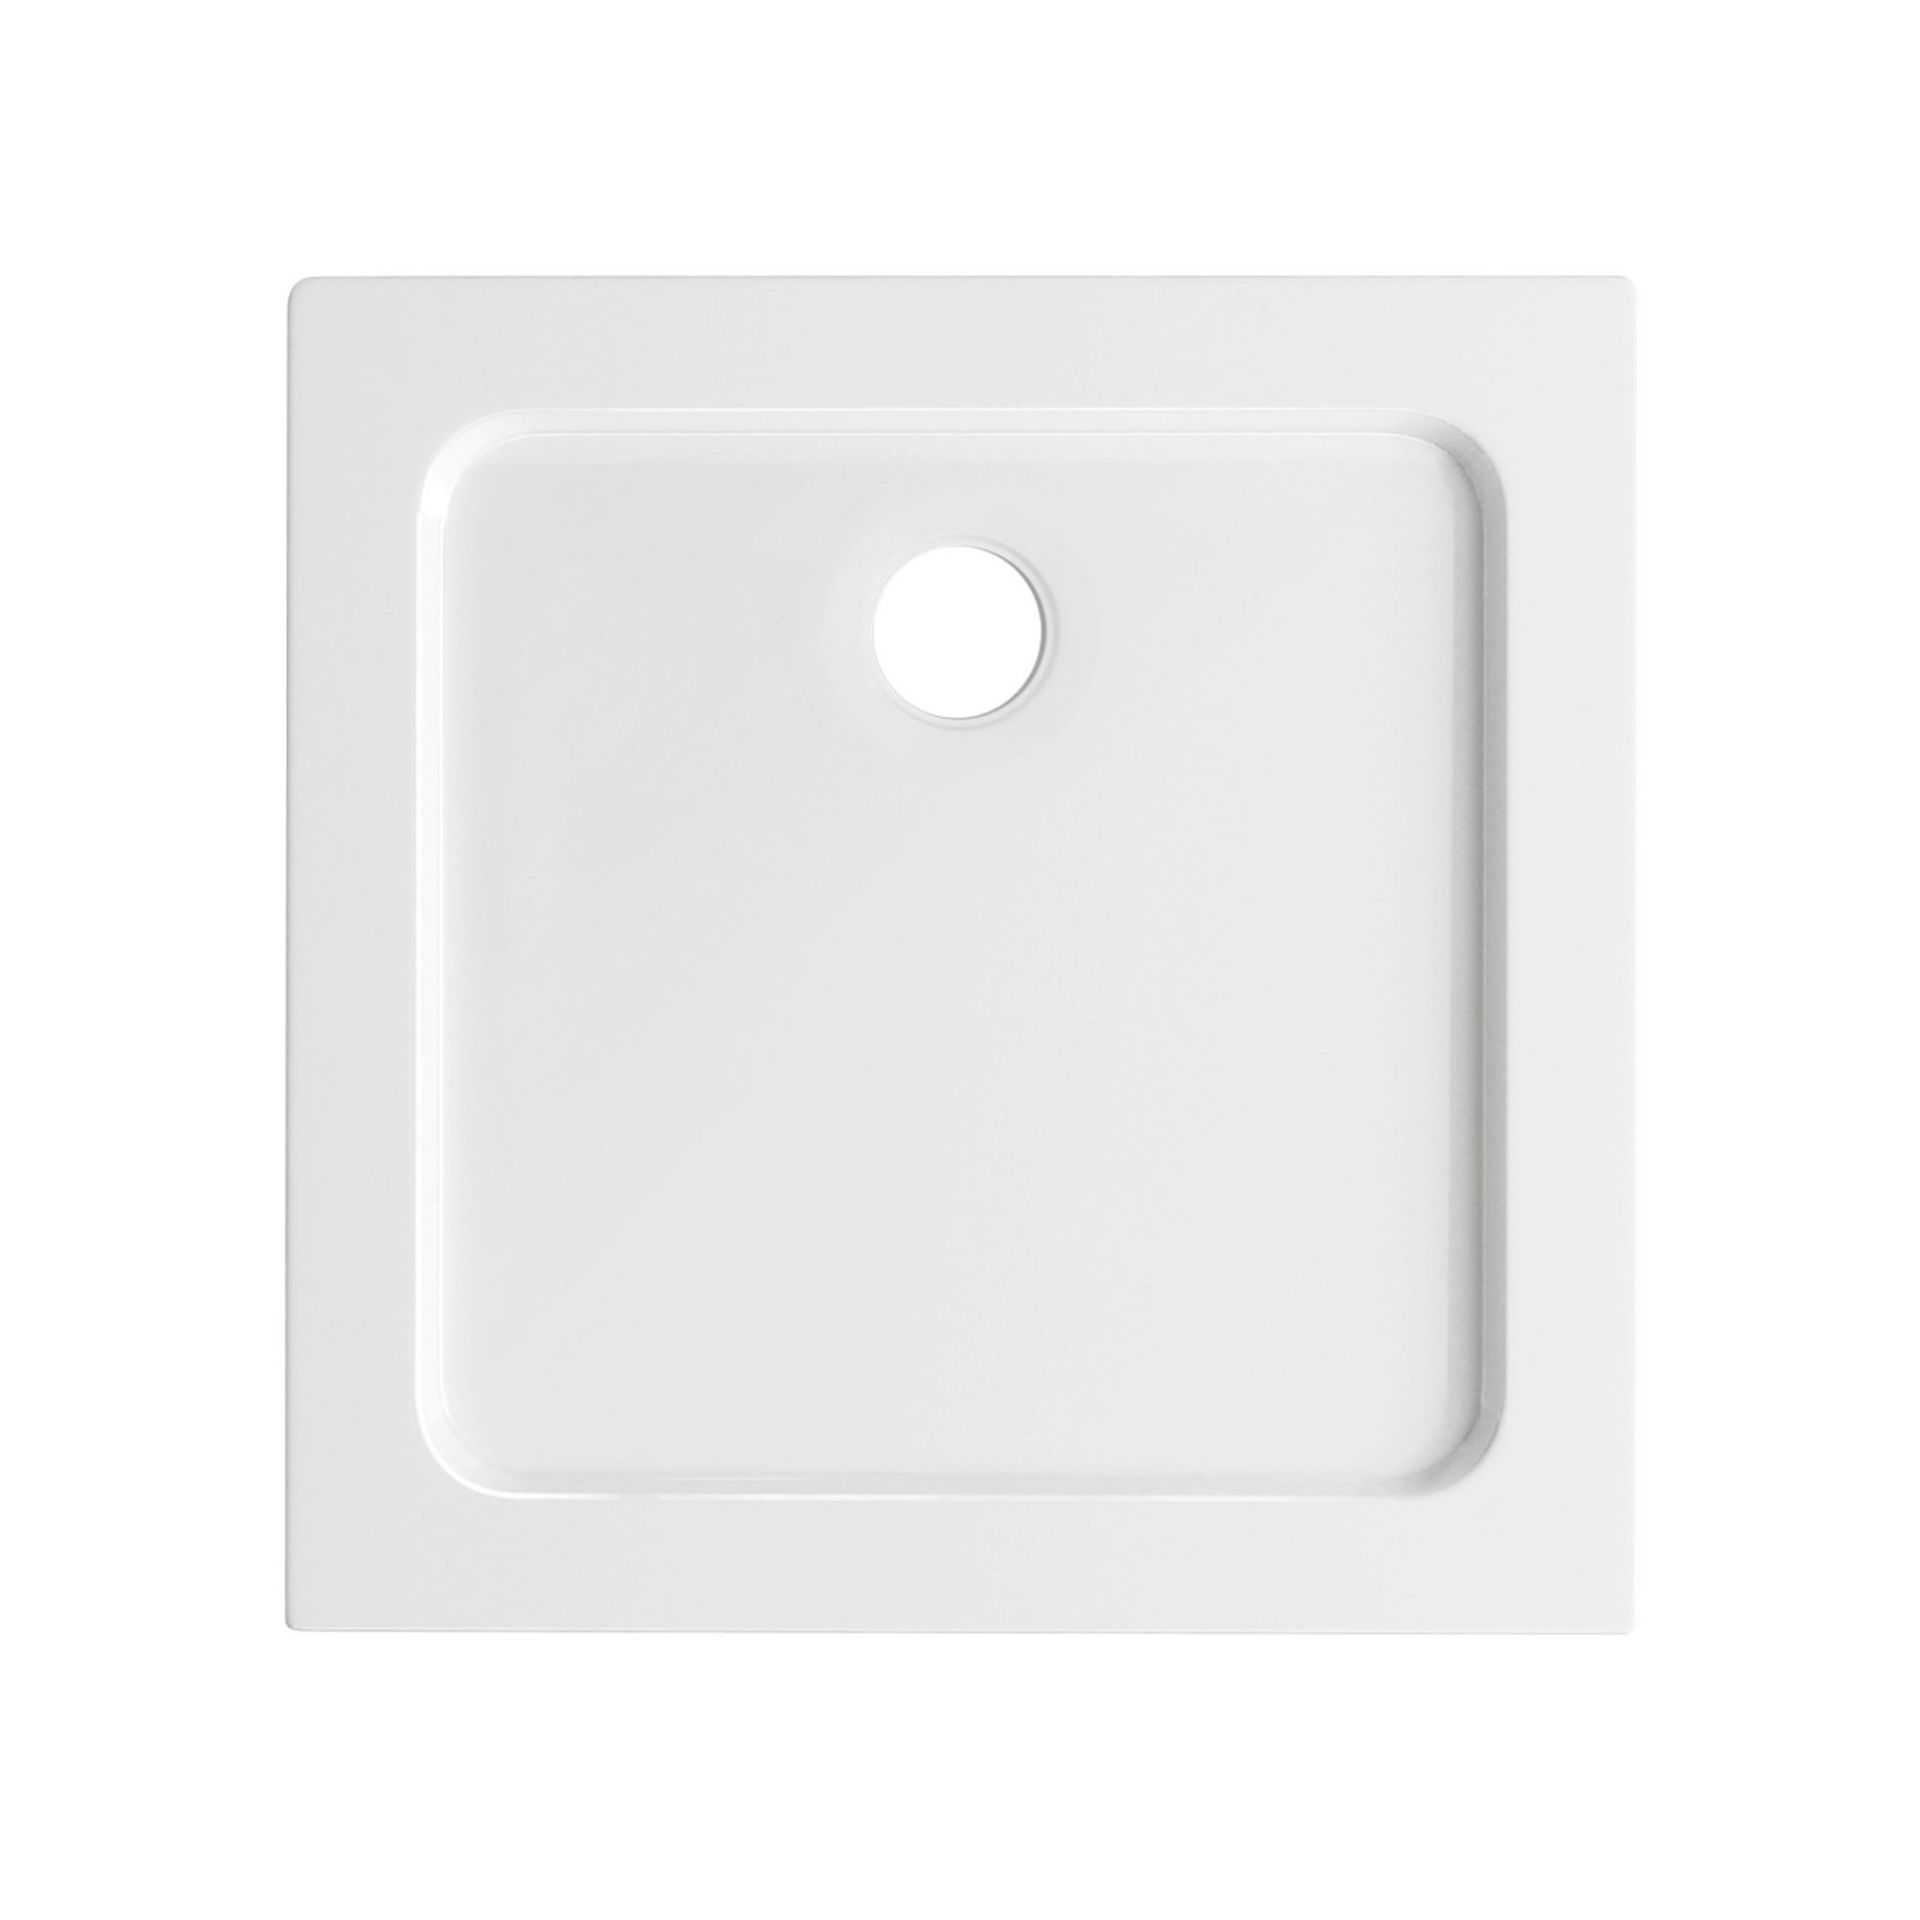 900x900mm Square Ultra Slim Stone Shower Tray. Low profile ultra slim design Gel coated stone r...